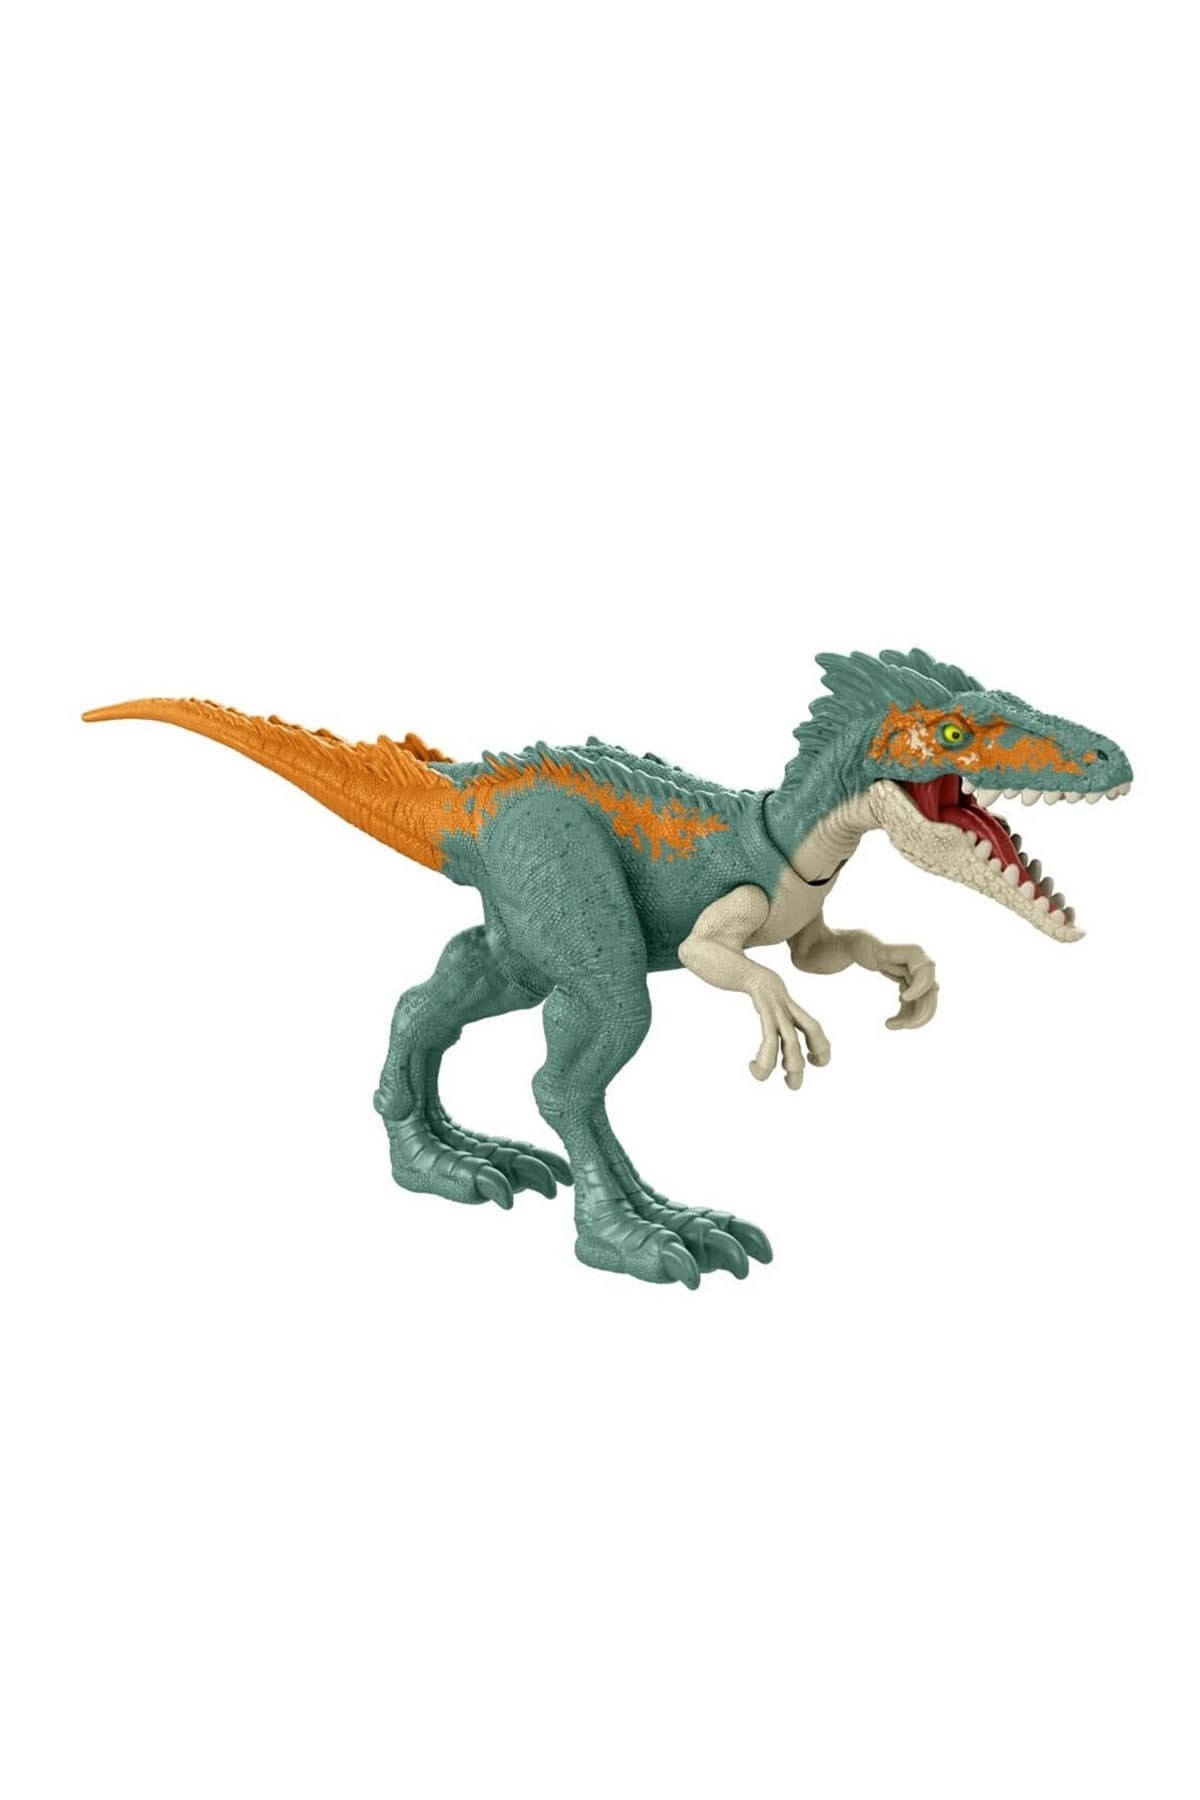 Jurassic World Tehlikeli Dinozor Figürü HDX22